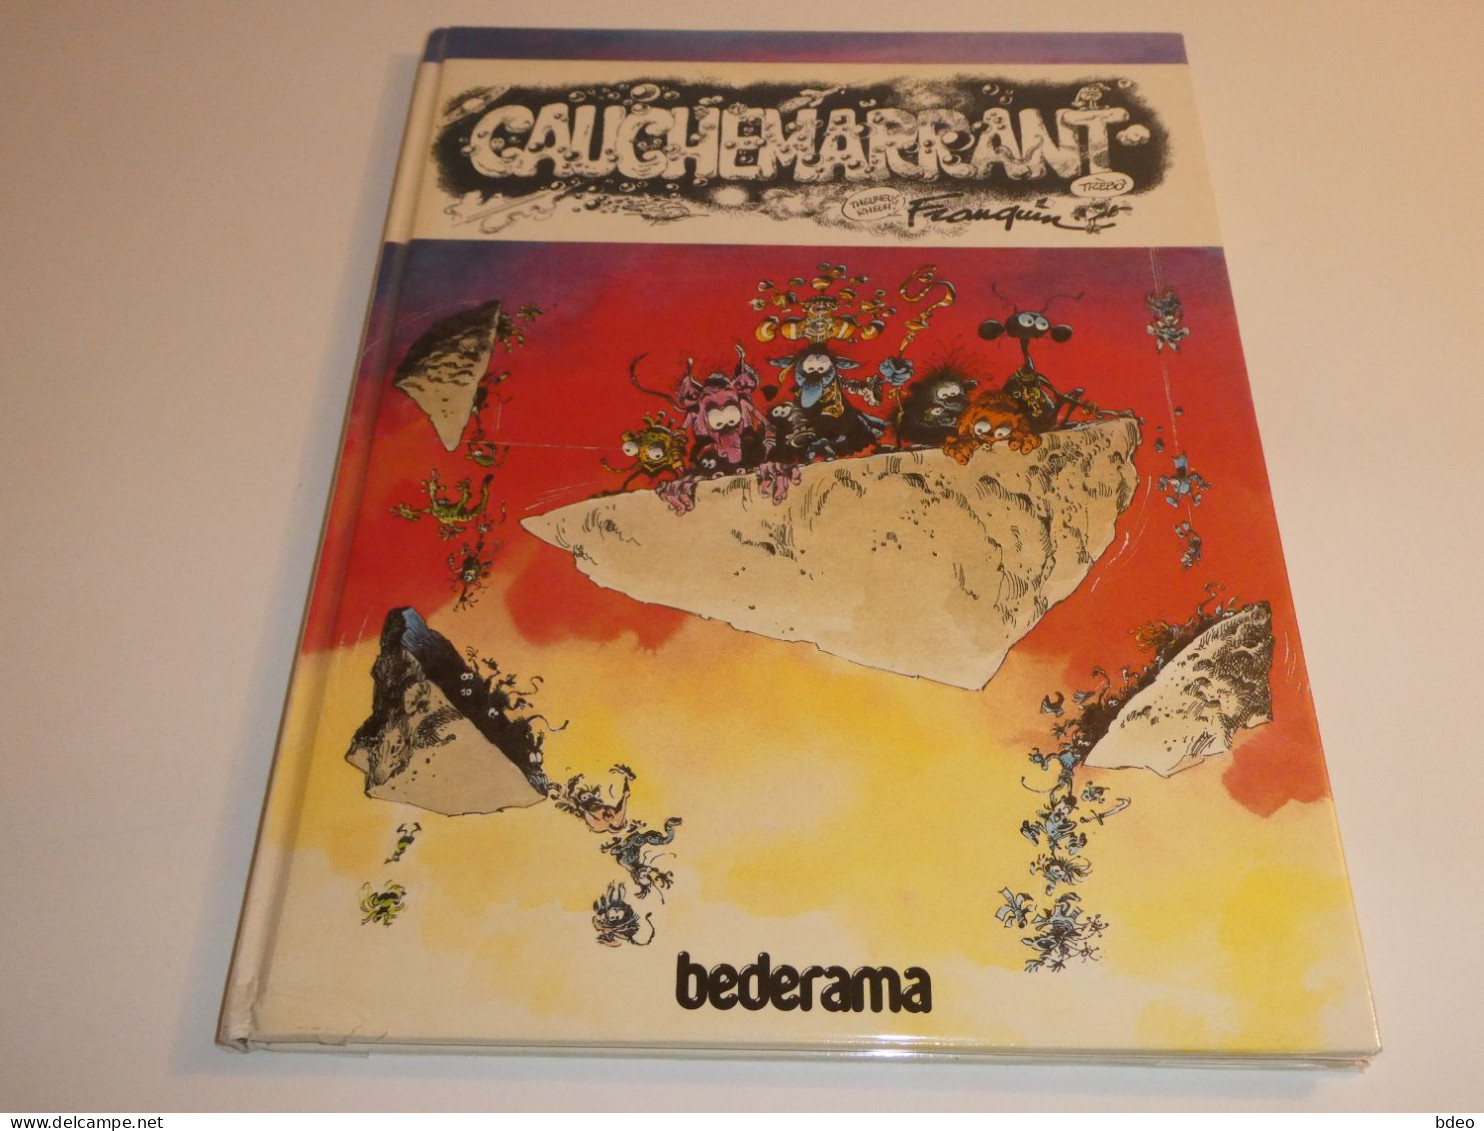 CAUCHEMARRANT / FRANQUIN / BE - Original Edition - French